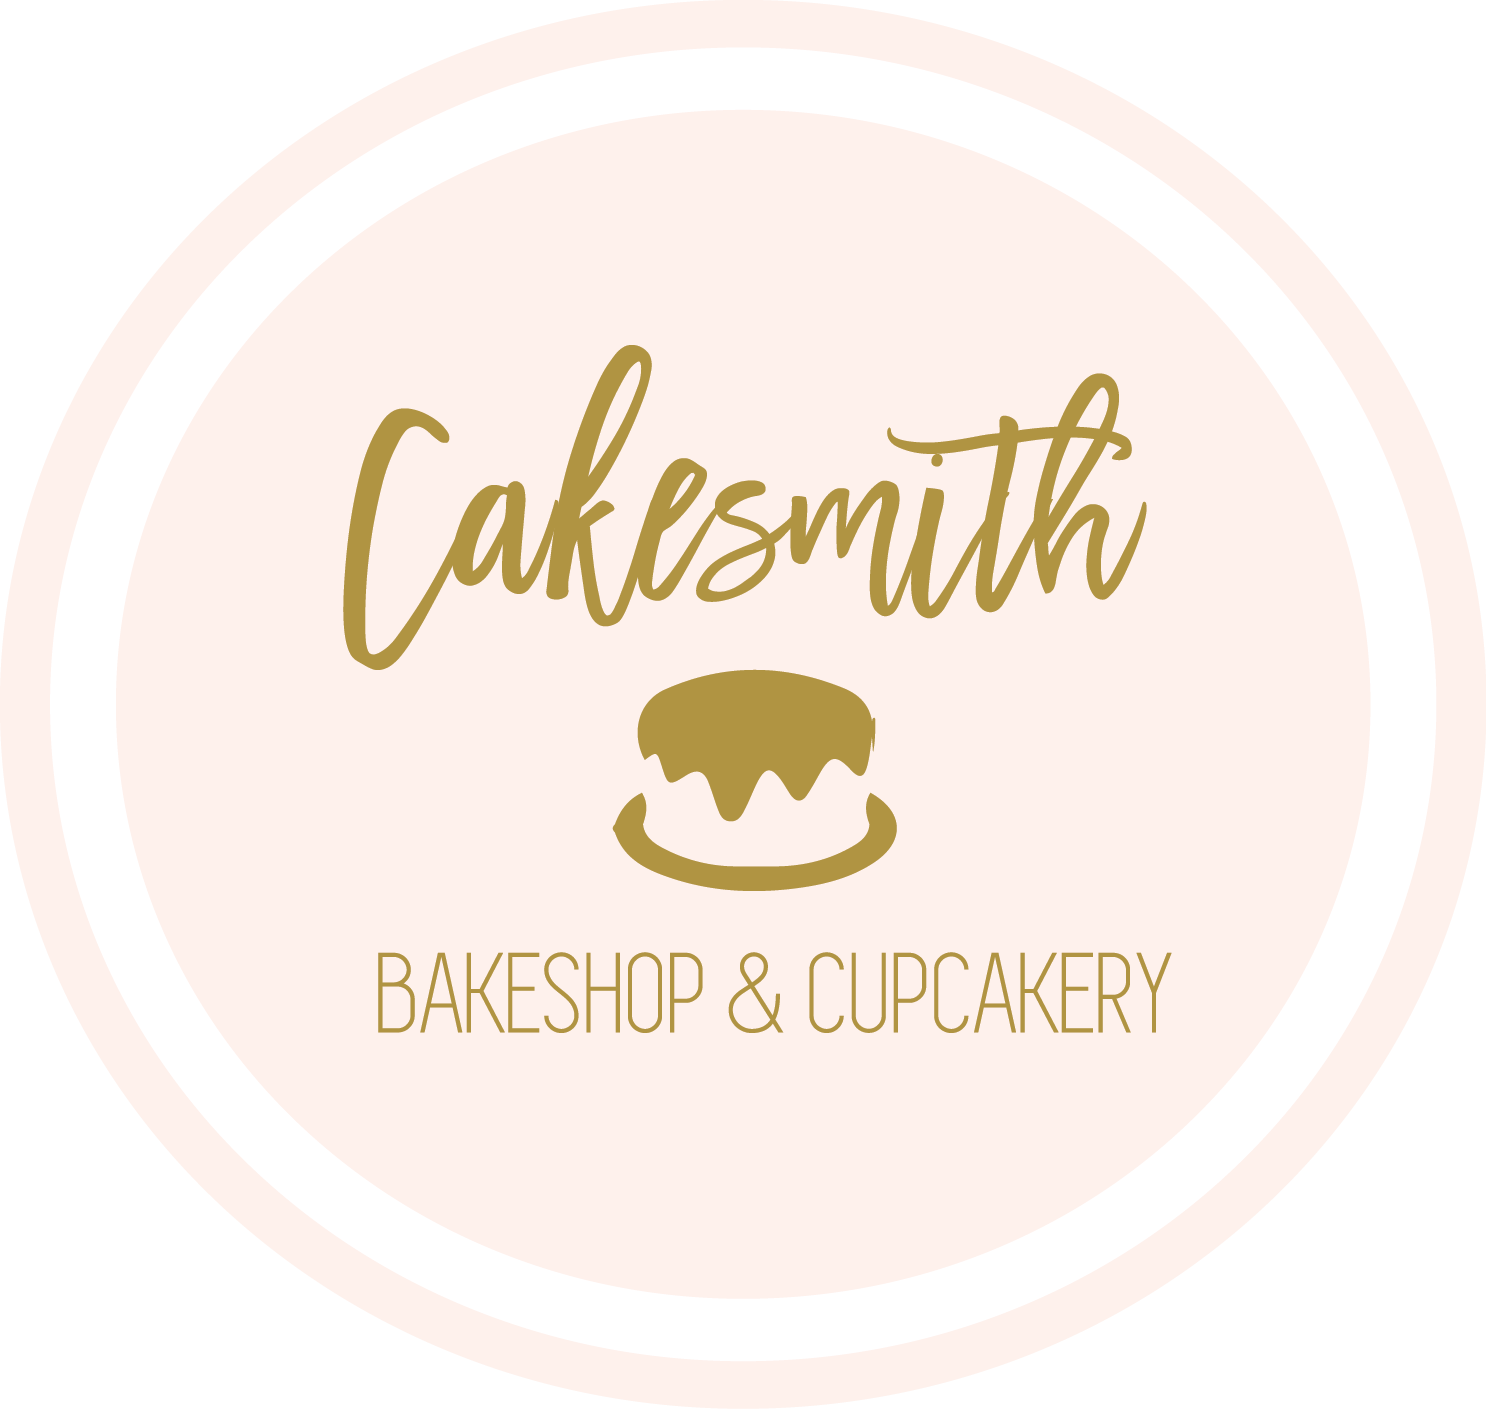 Cakesmith Baking Co.